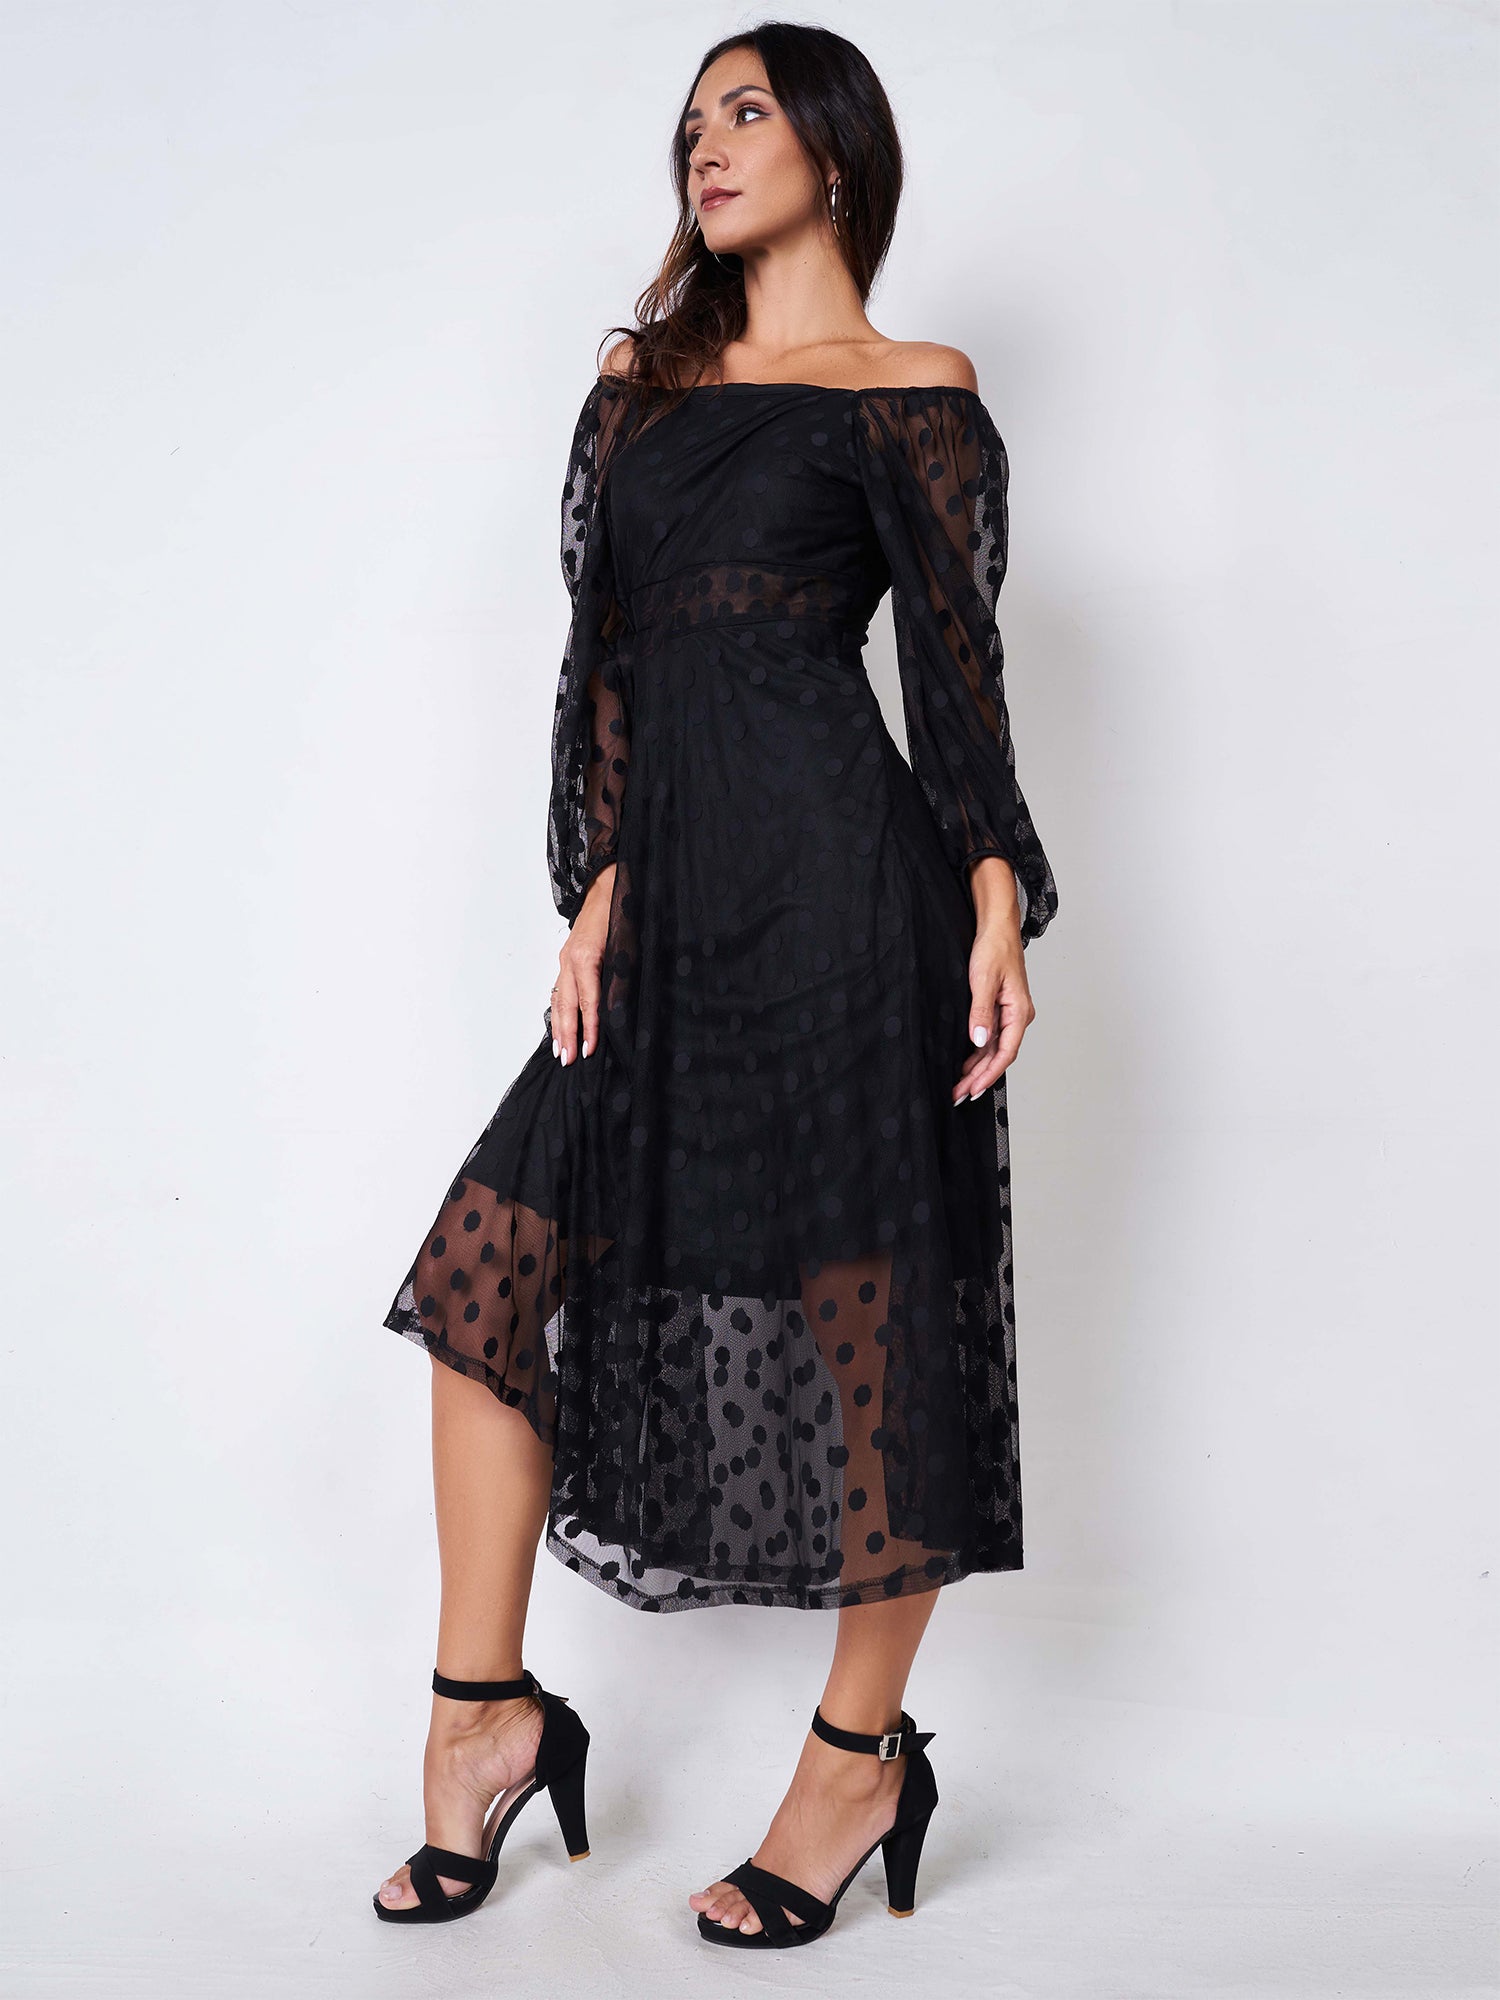 Victorian bell sleeve black dress